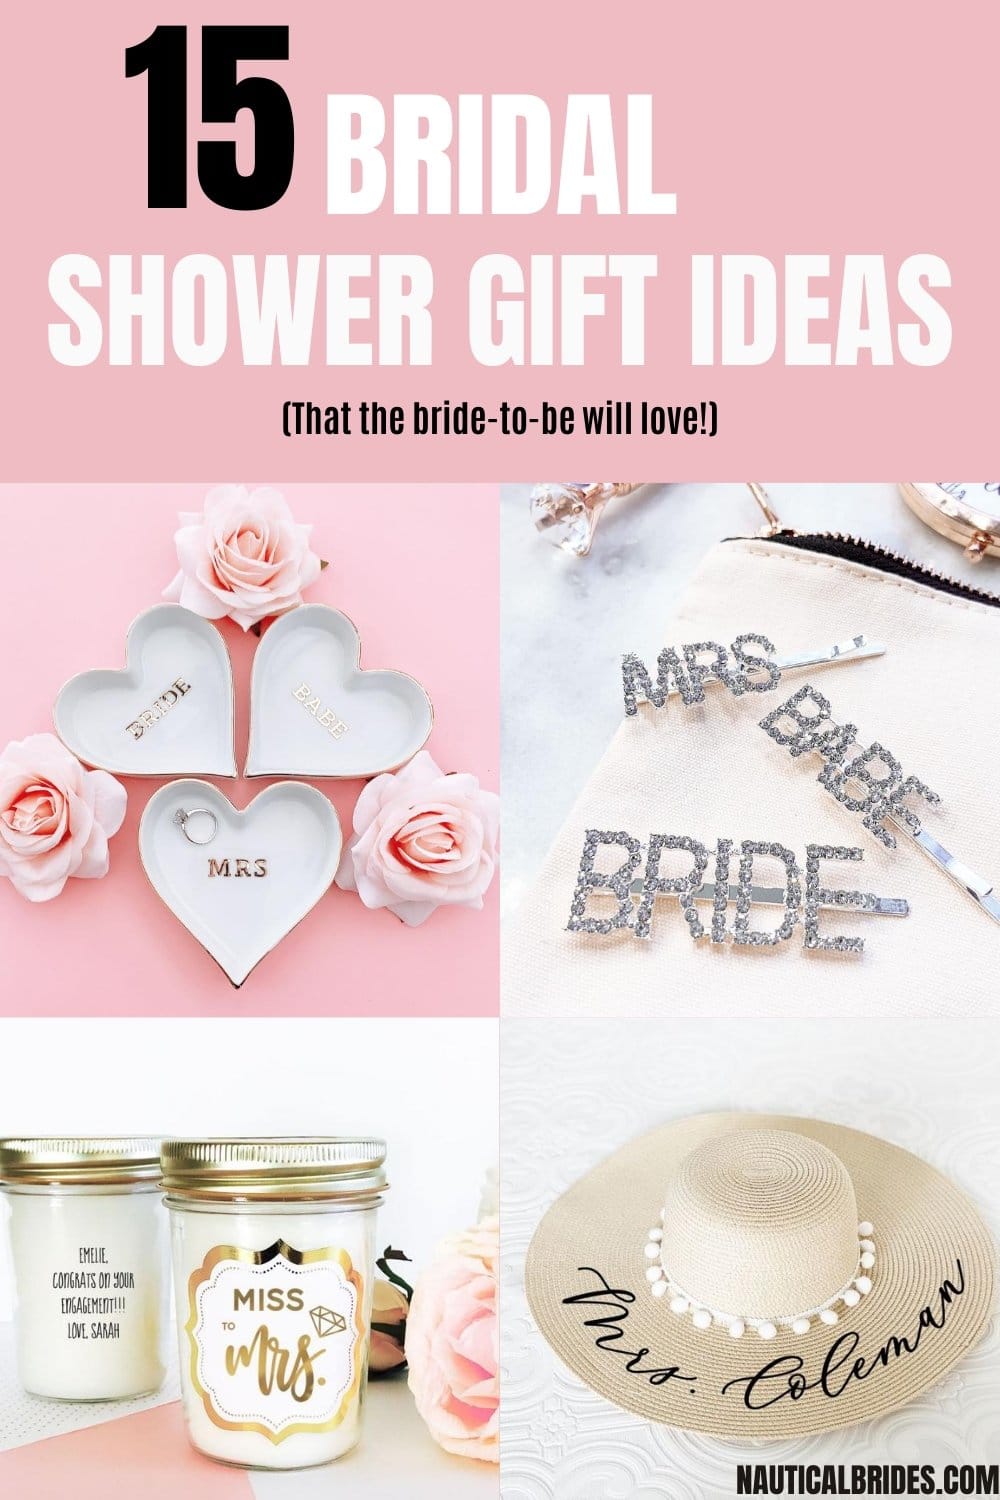 14 Unique & Creative Bridal Shower Gift Ideas